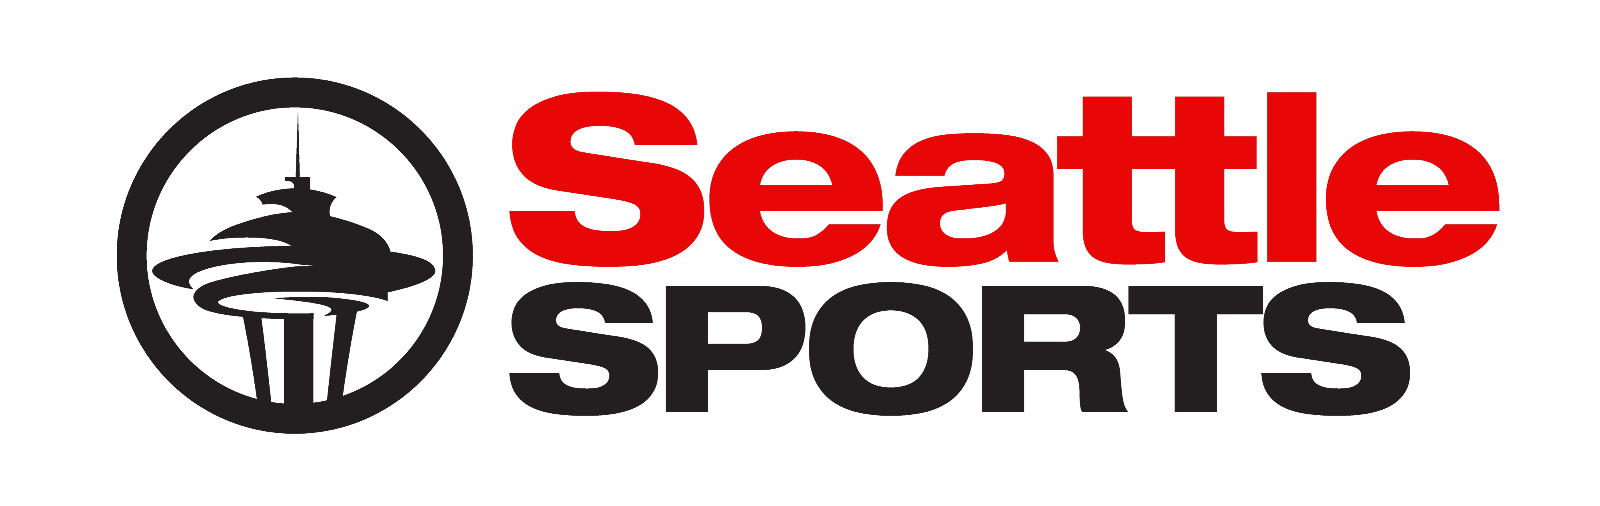 Seattle Sports 710 logo